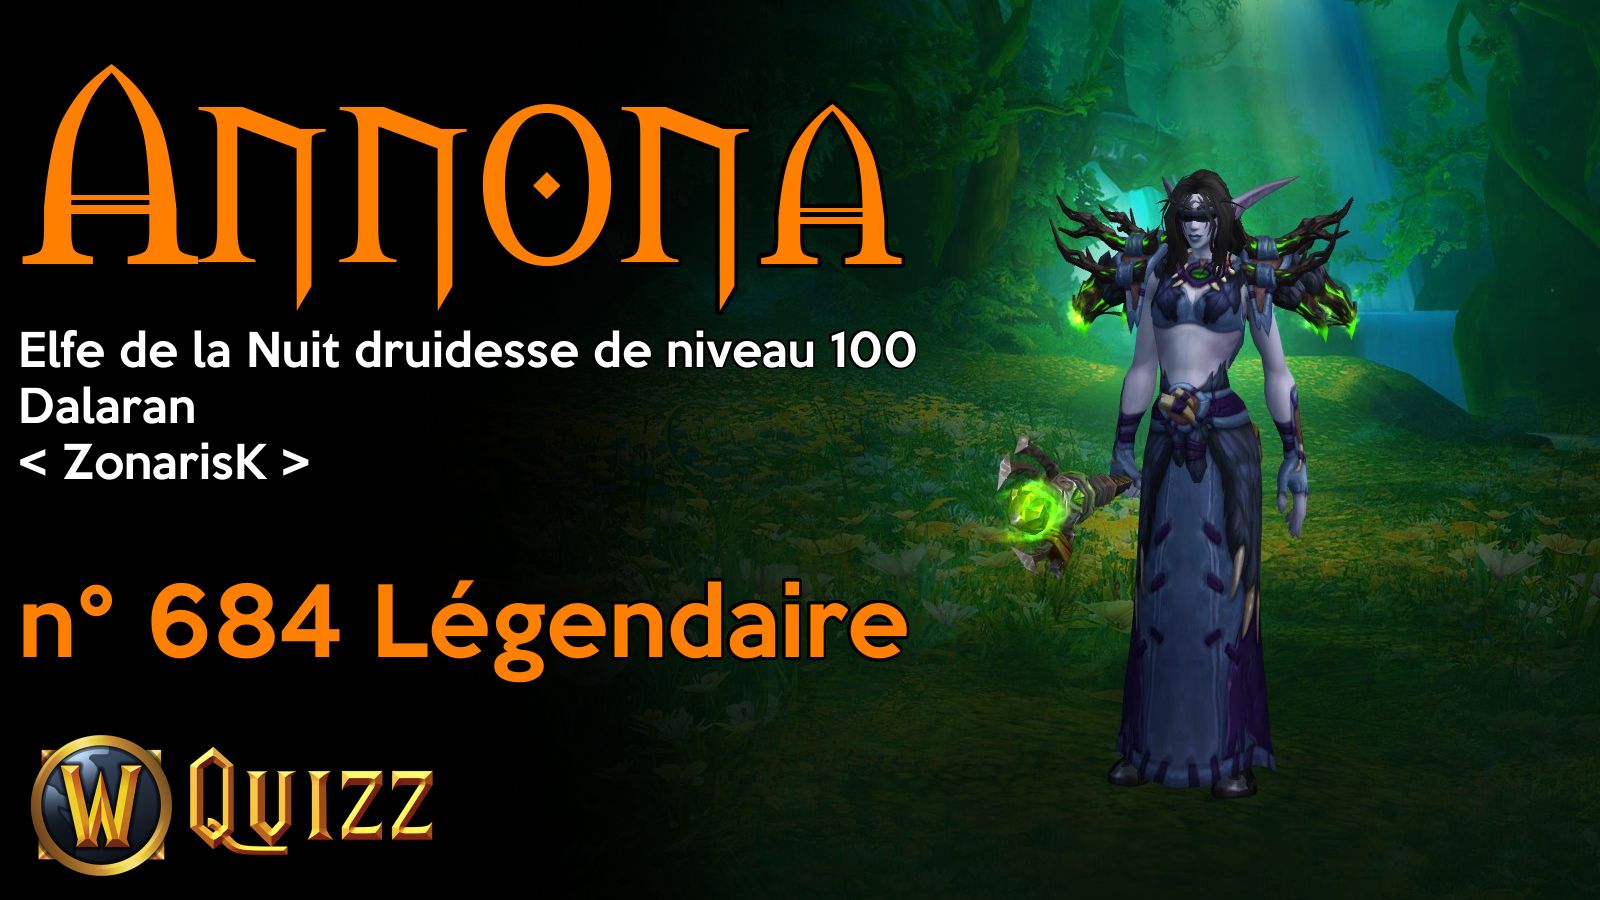 Annona, Elfe de la Nuit druidesse de niveau 100, Dalaran